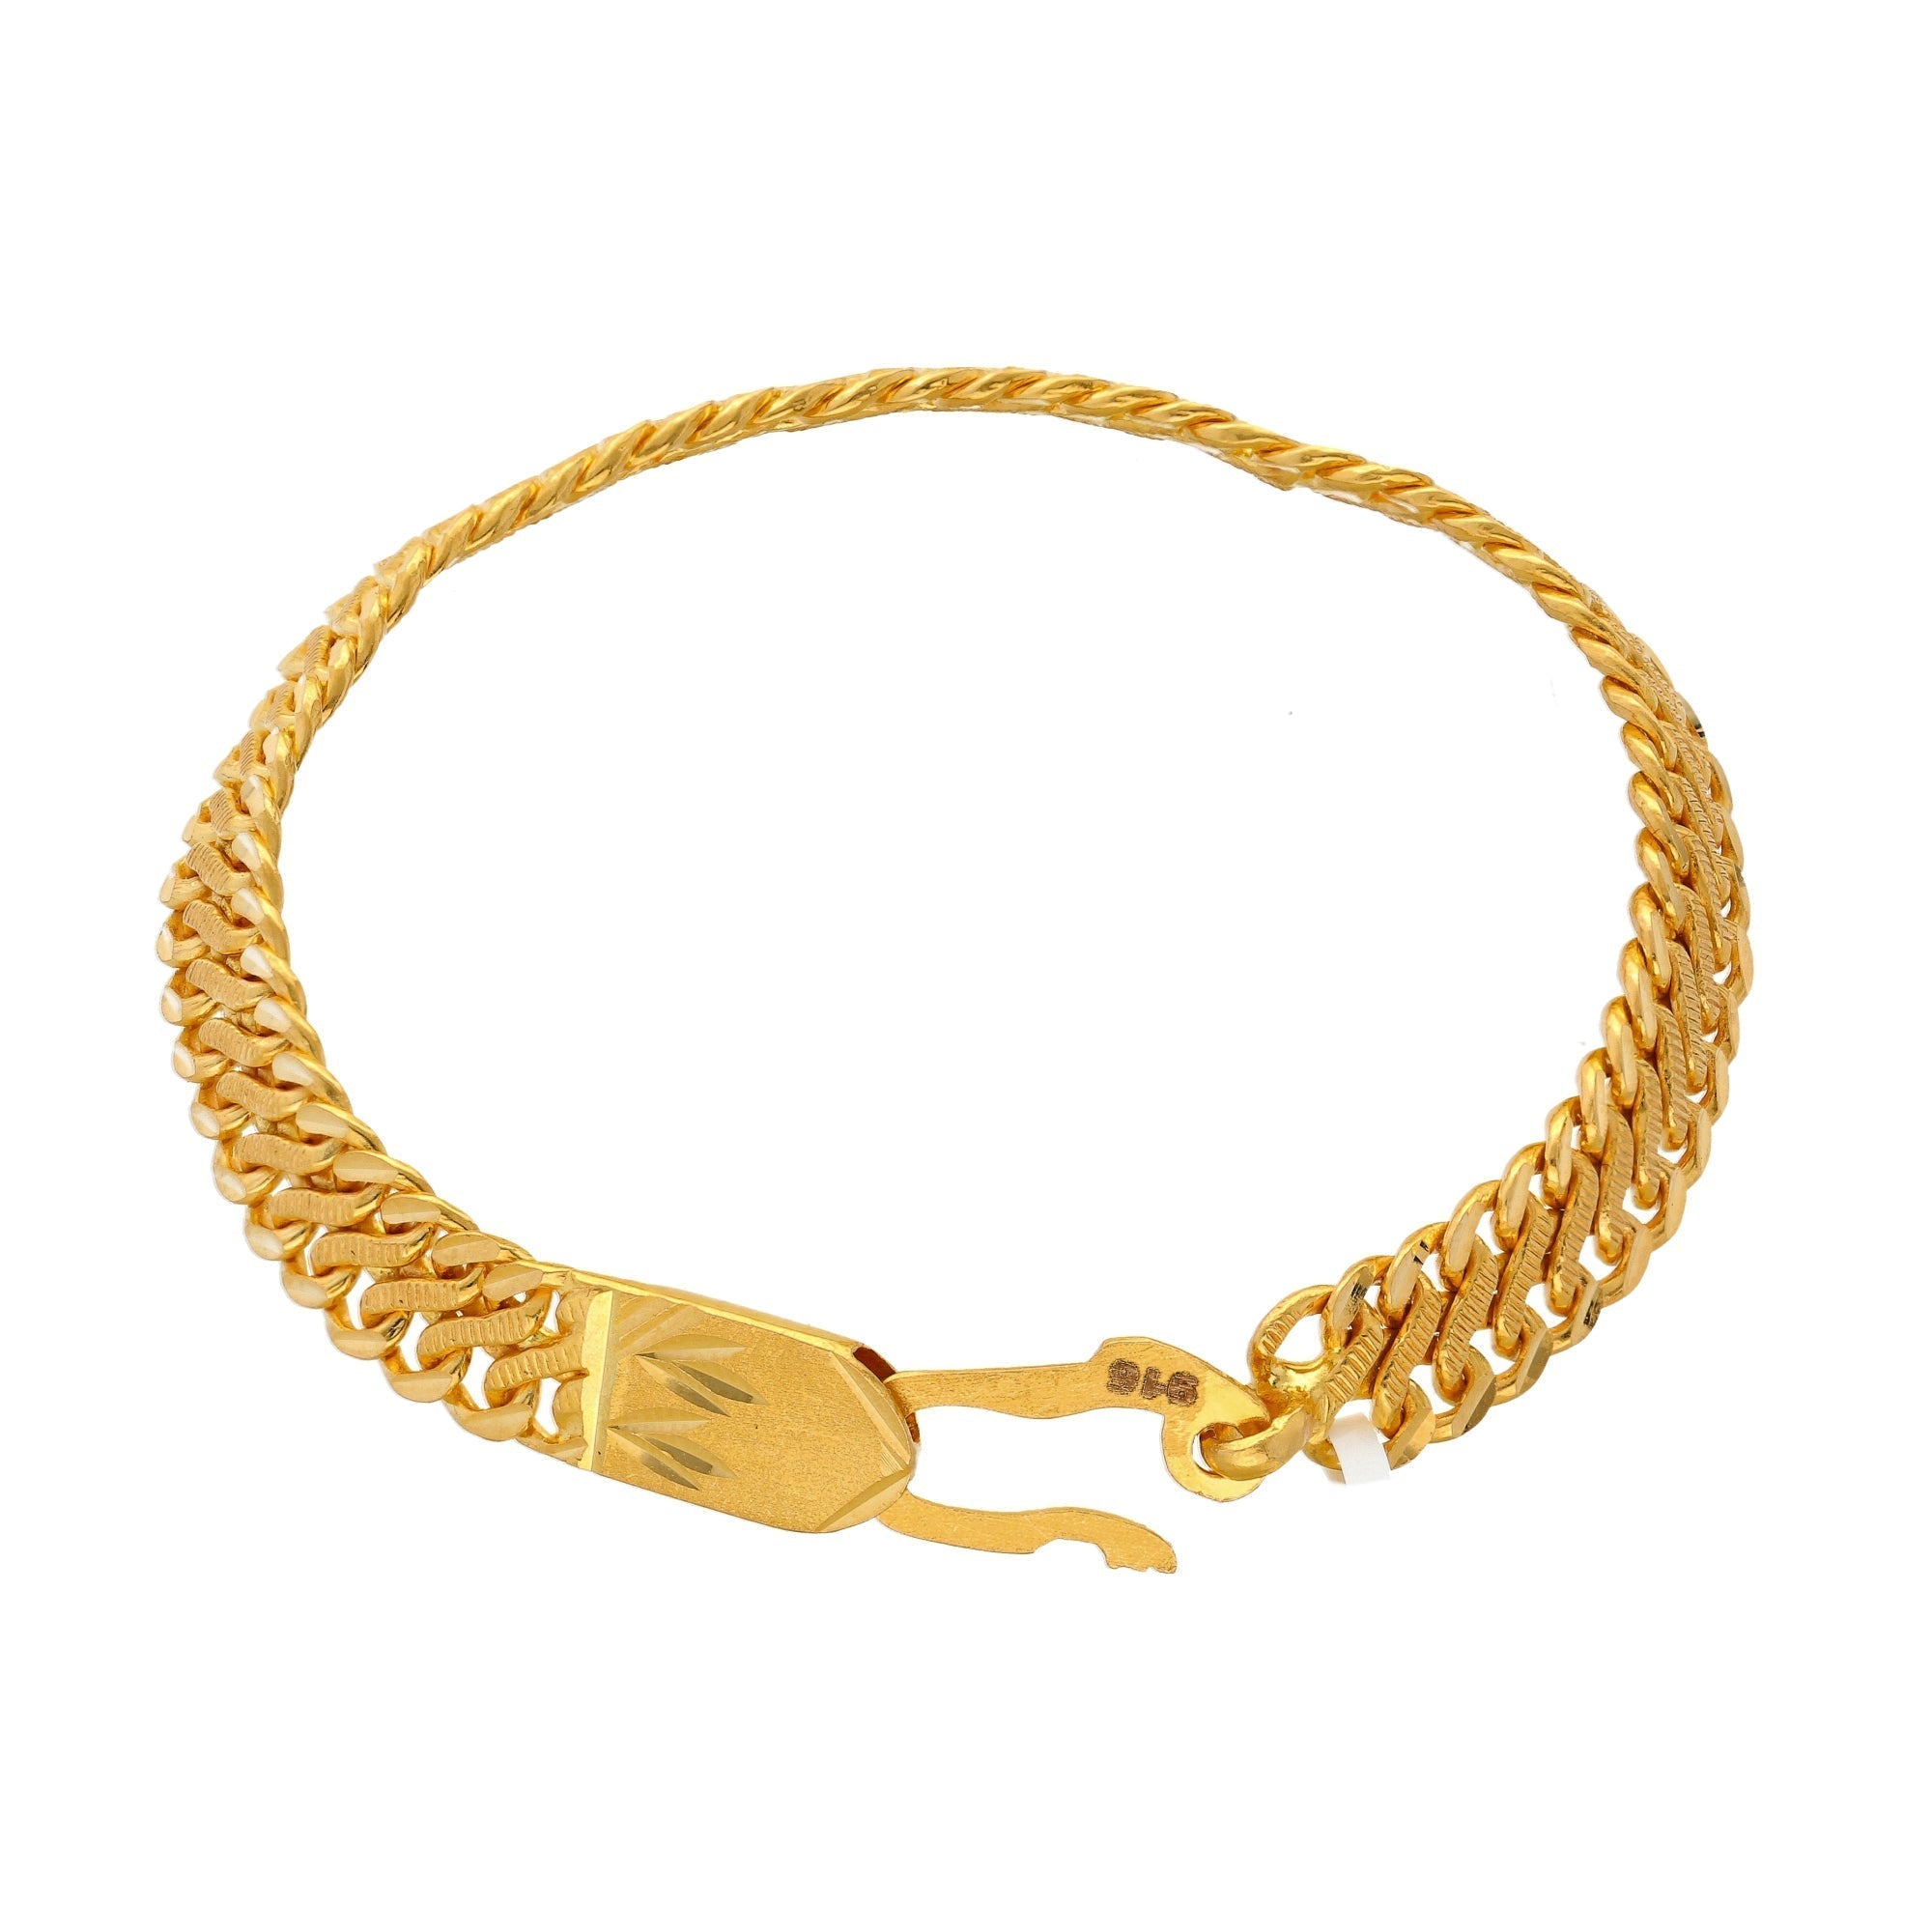 Buy quality Men's fancy cz bracelet 22k gold in Rajkot